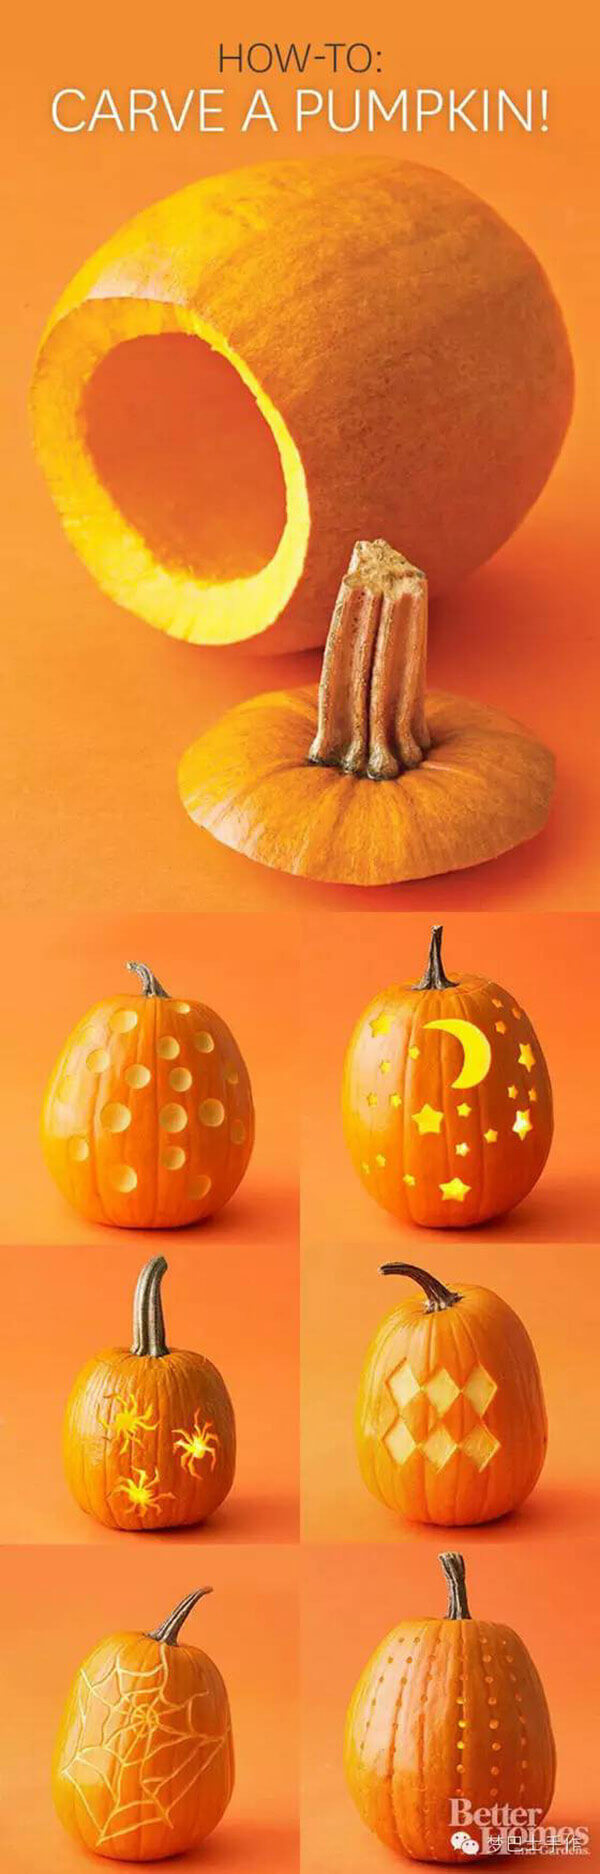 DIY Pumpkin Carving Ideas: Night Sky